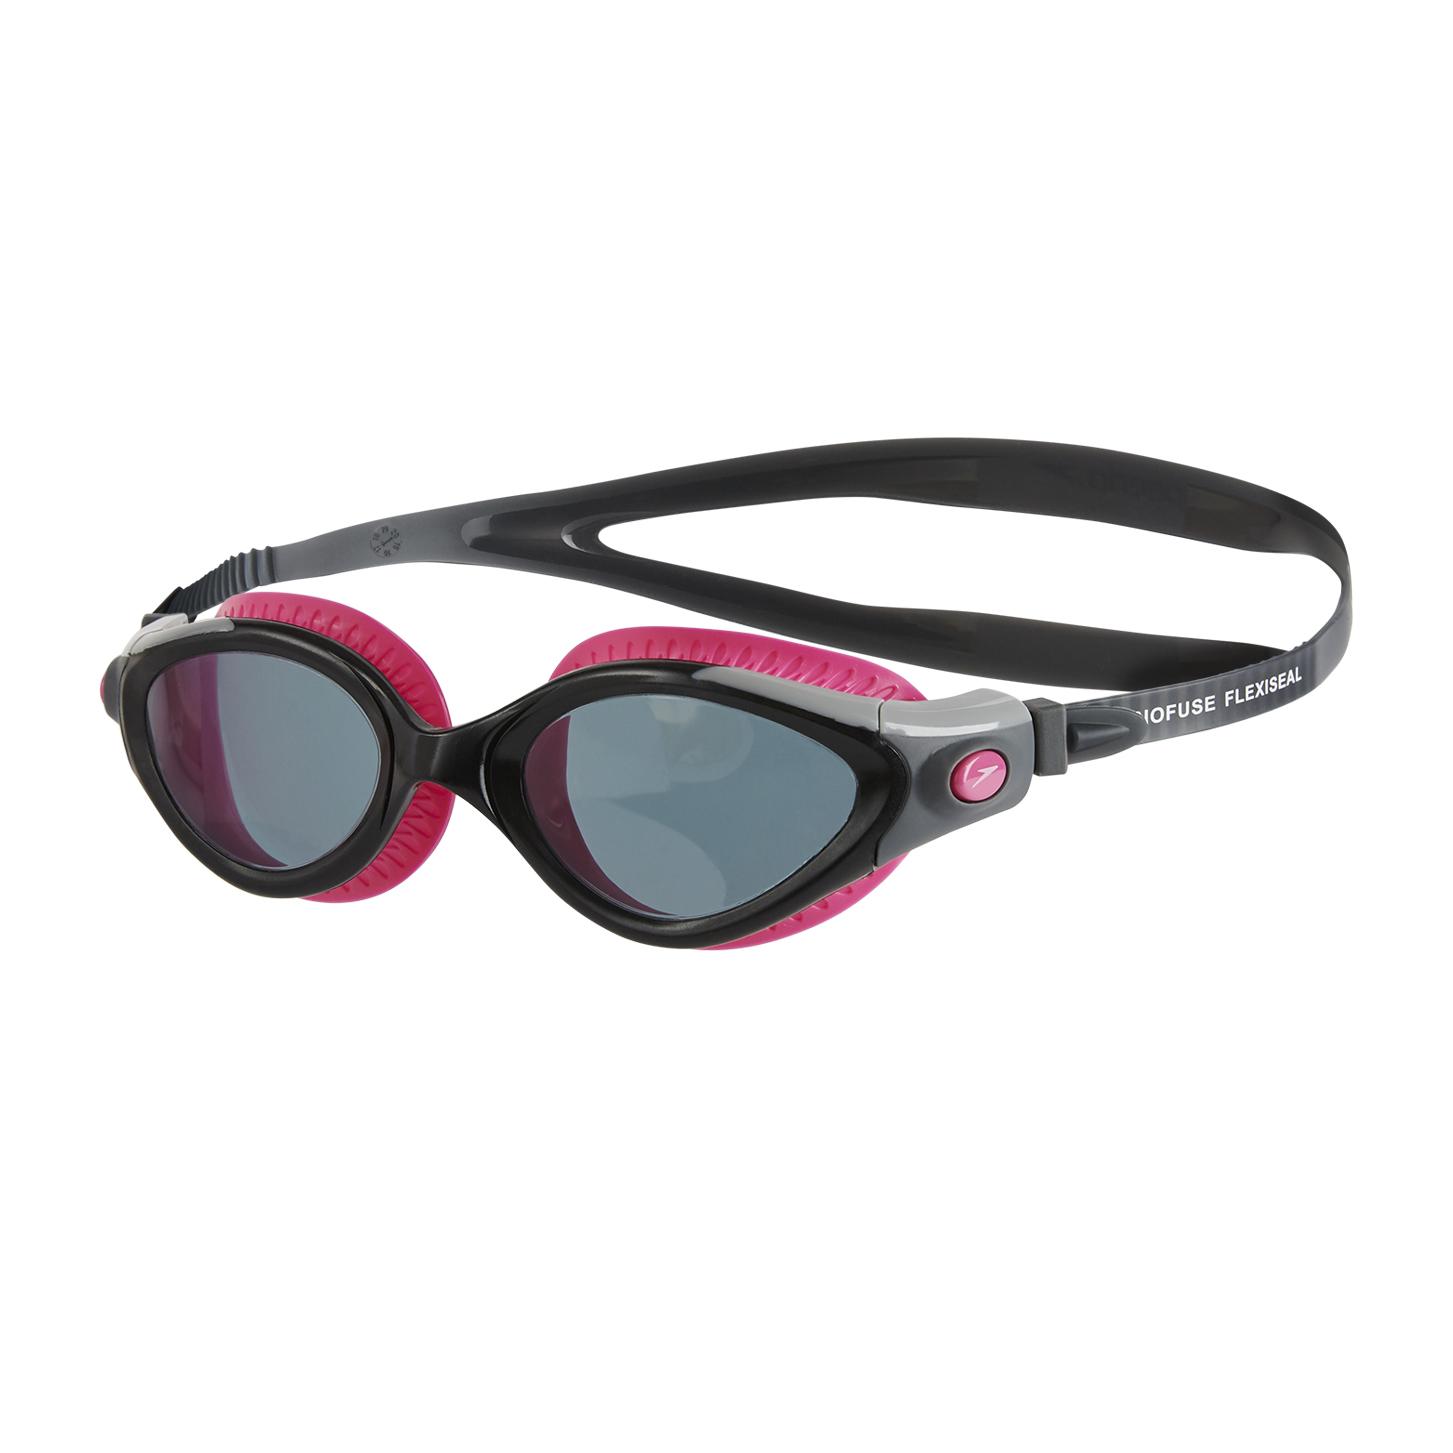 Speedo Womens Futura Biofuse Flexiseal Goggles - Ecstatic Pink/black